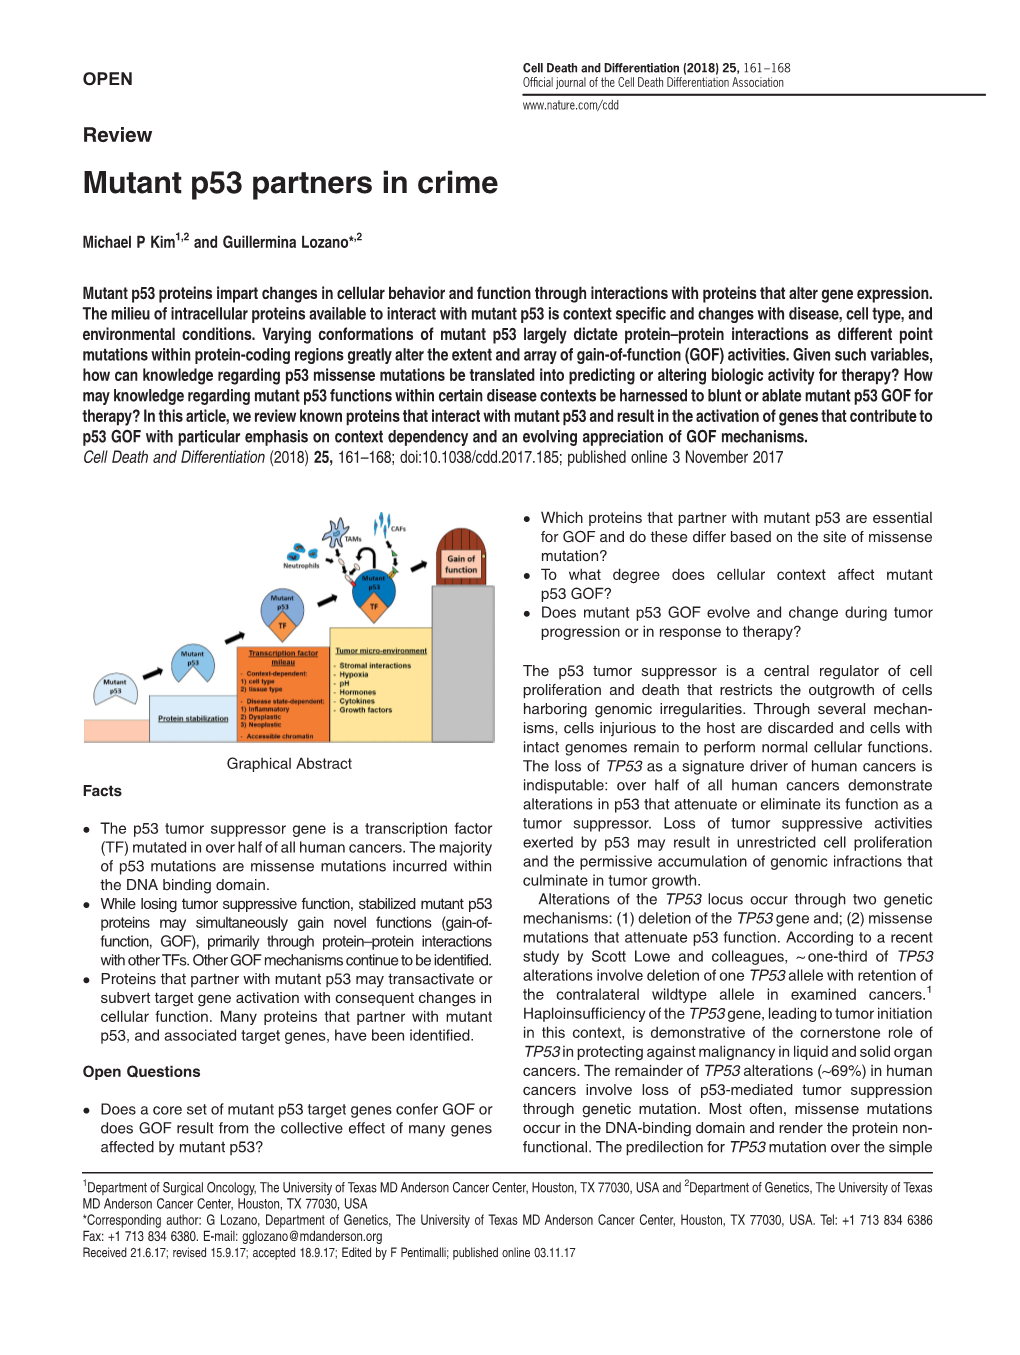 Mutant P53 Partners in Crime